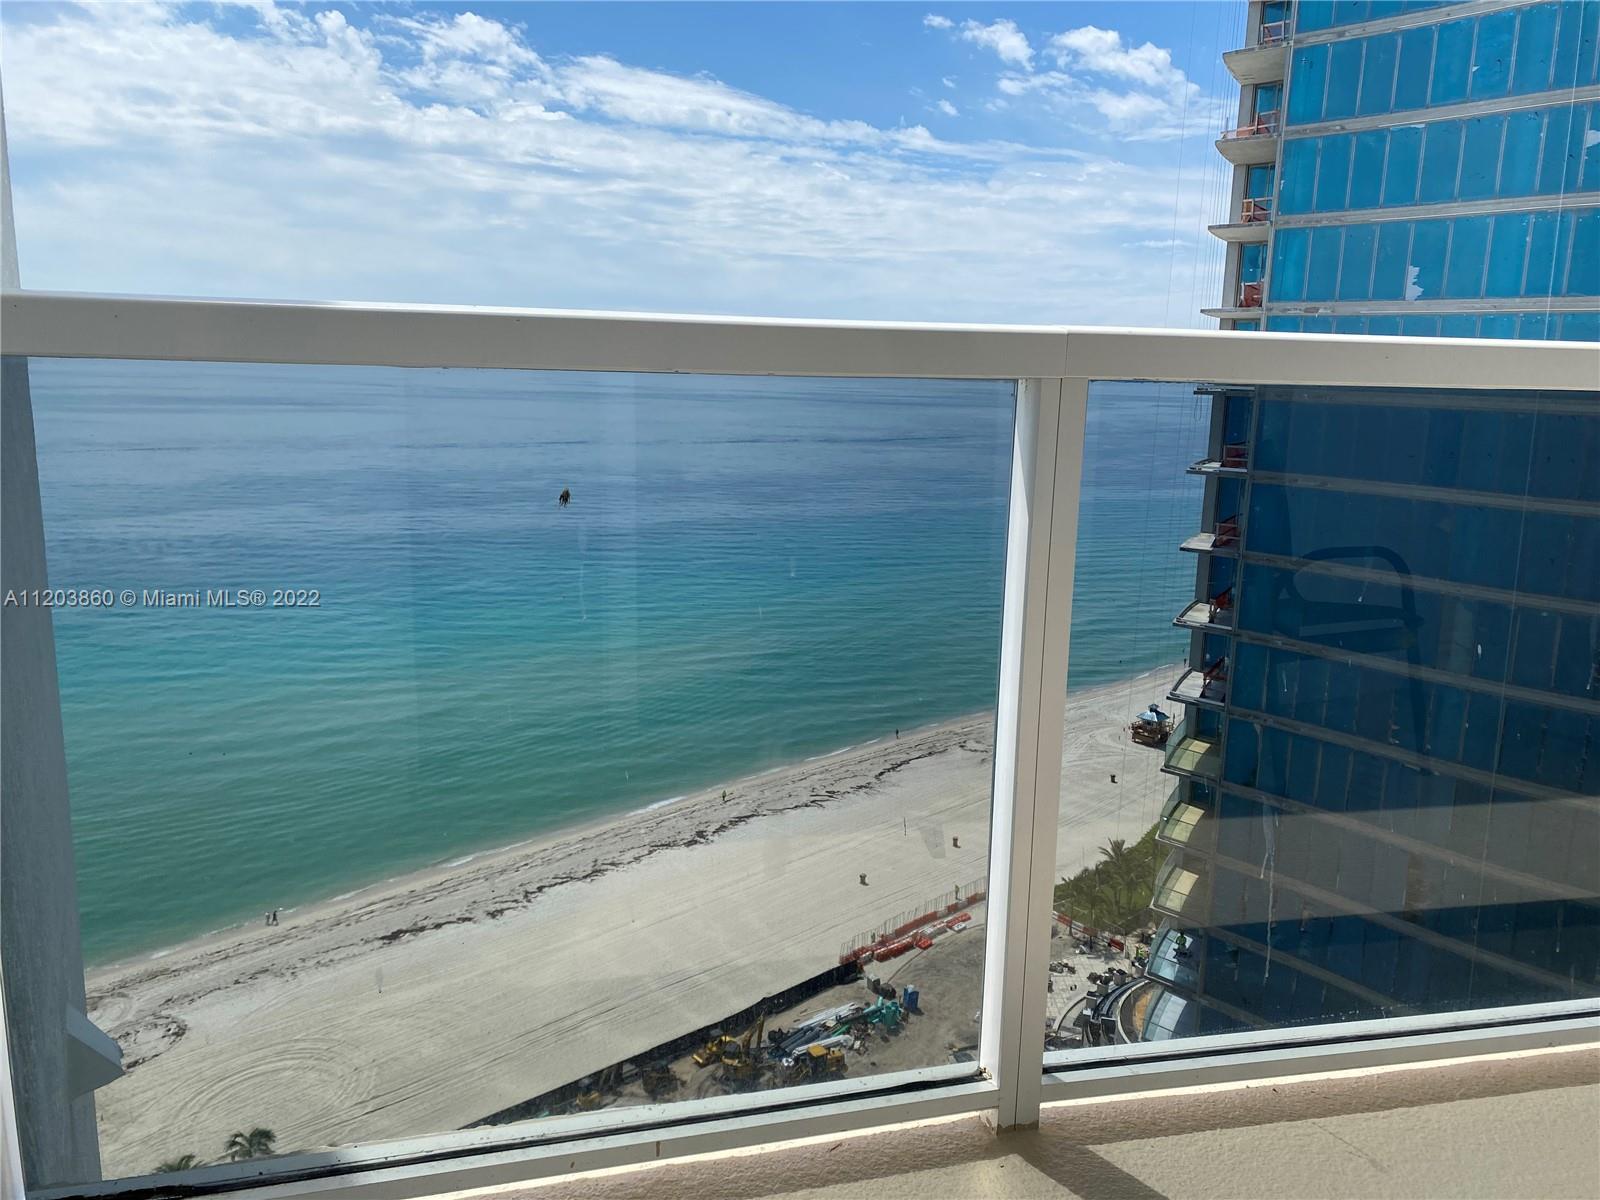 Trump International Beach Resort Sunny Isles Beach FL. Forbes TRAVEL GUIDE 2018 "One of the Finest F